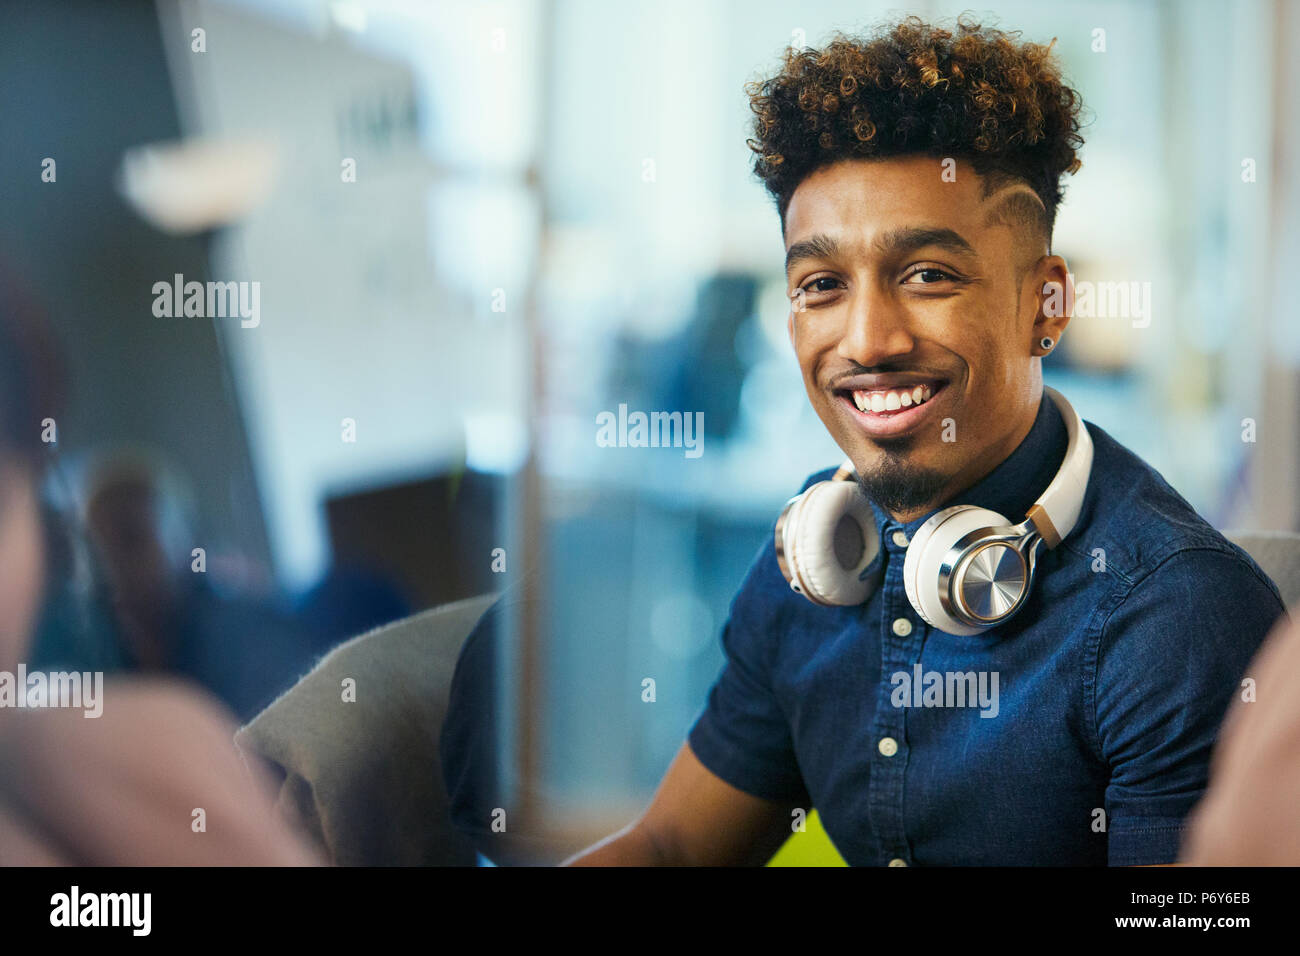 Portrait smiling, confident creative businessman with headphones Stock Photo